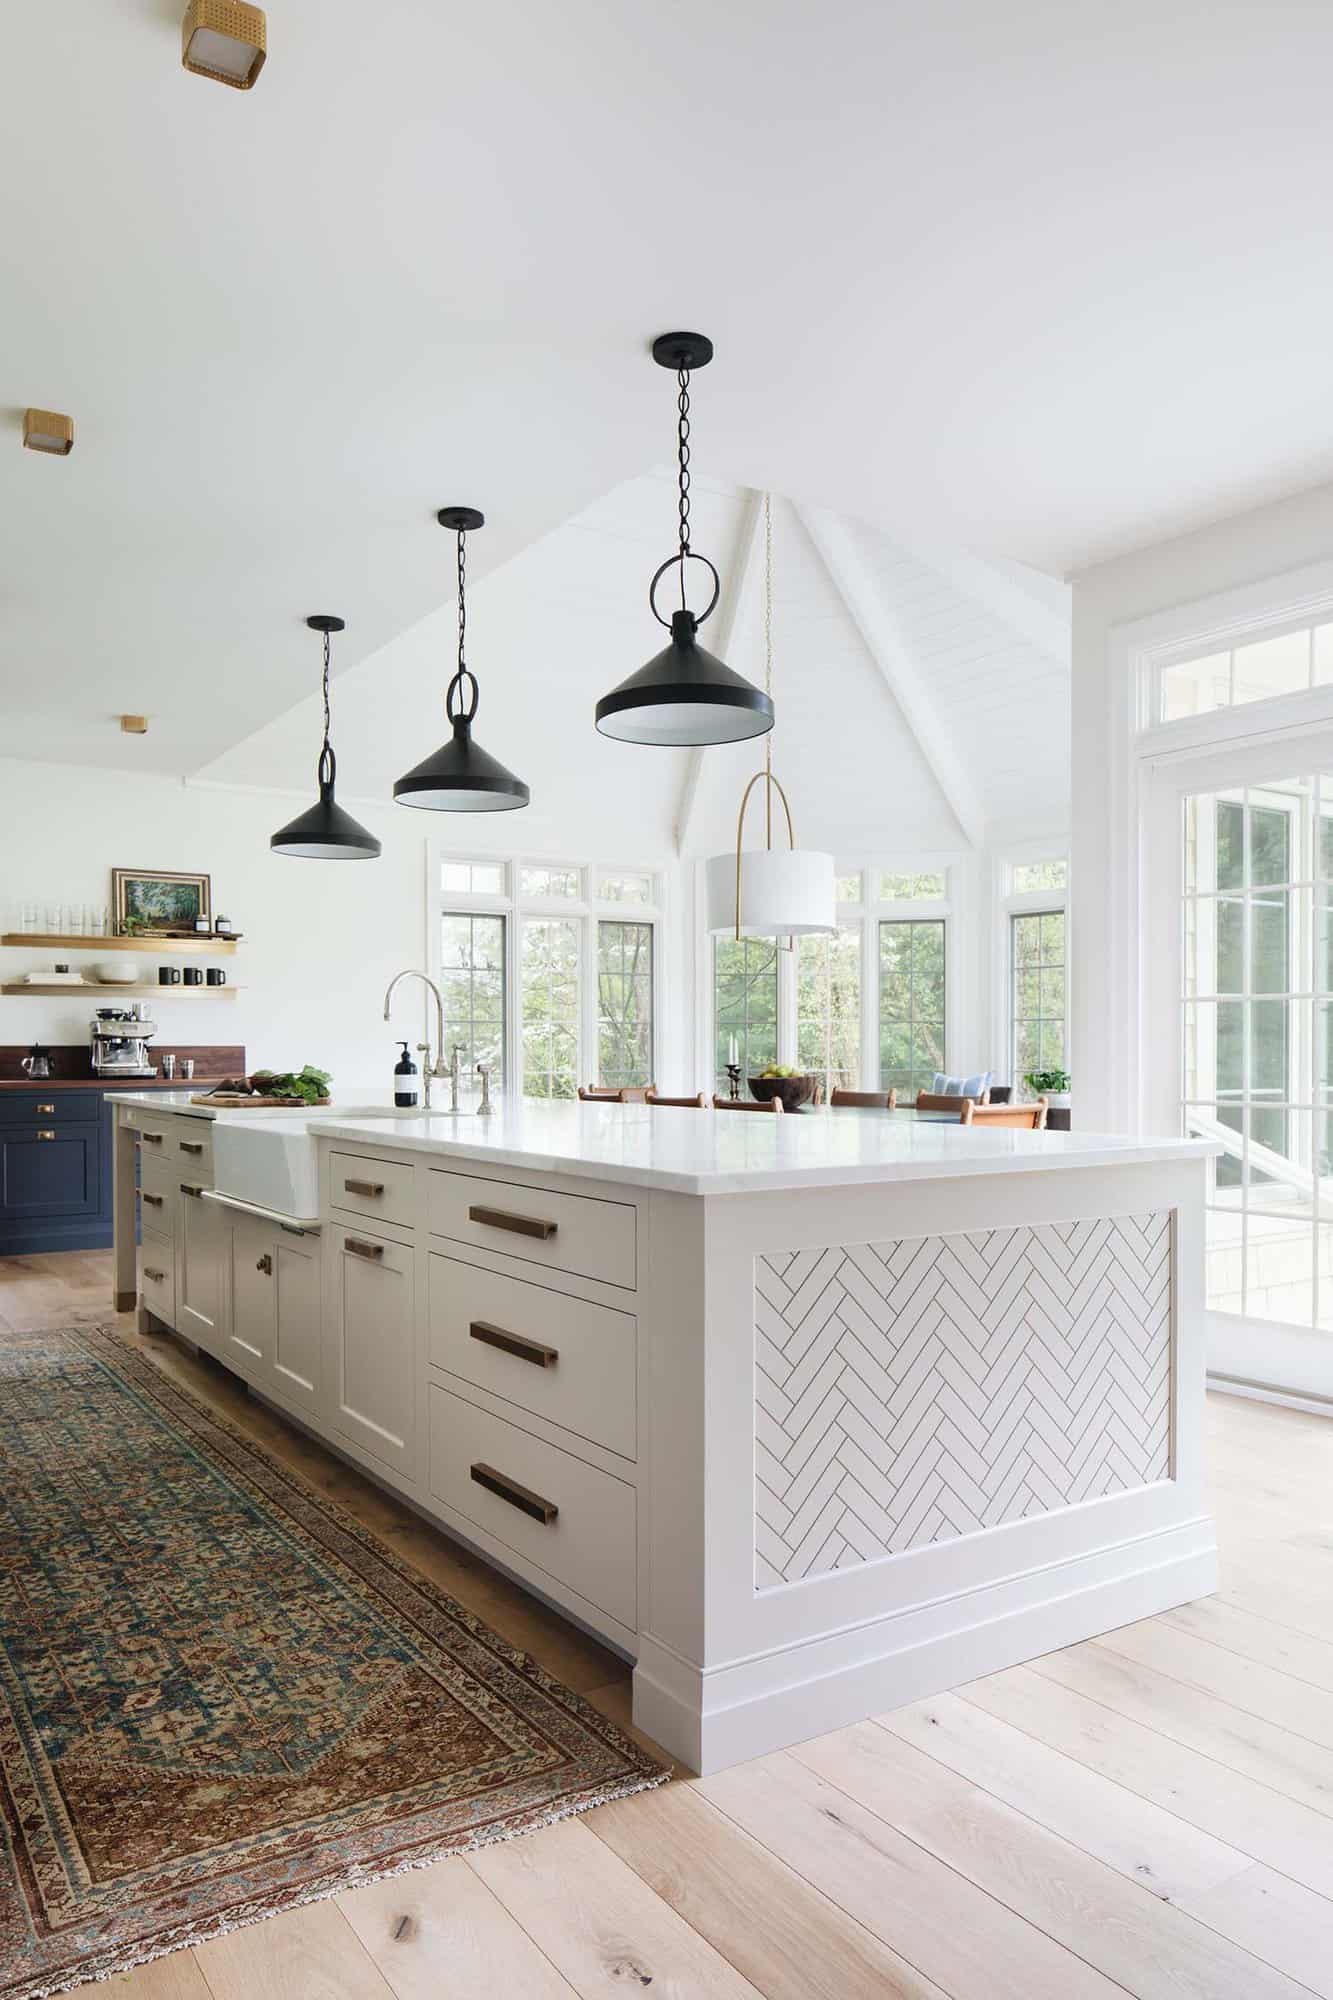 modern Scandinavian kitchen with pendant lights over the island